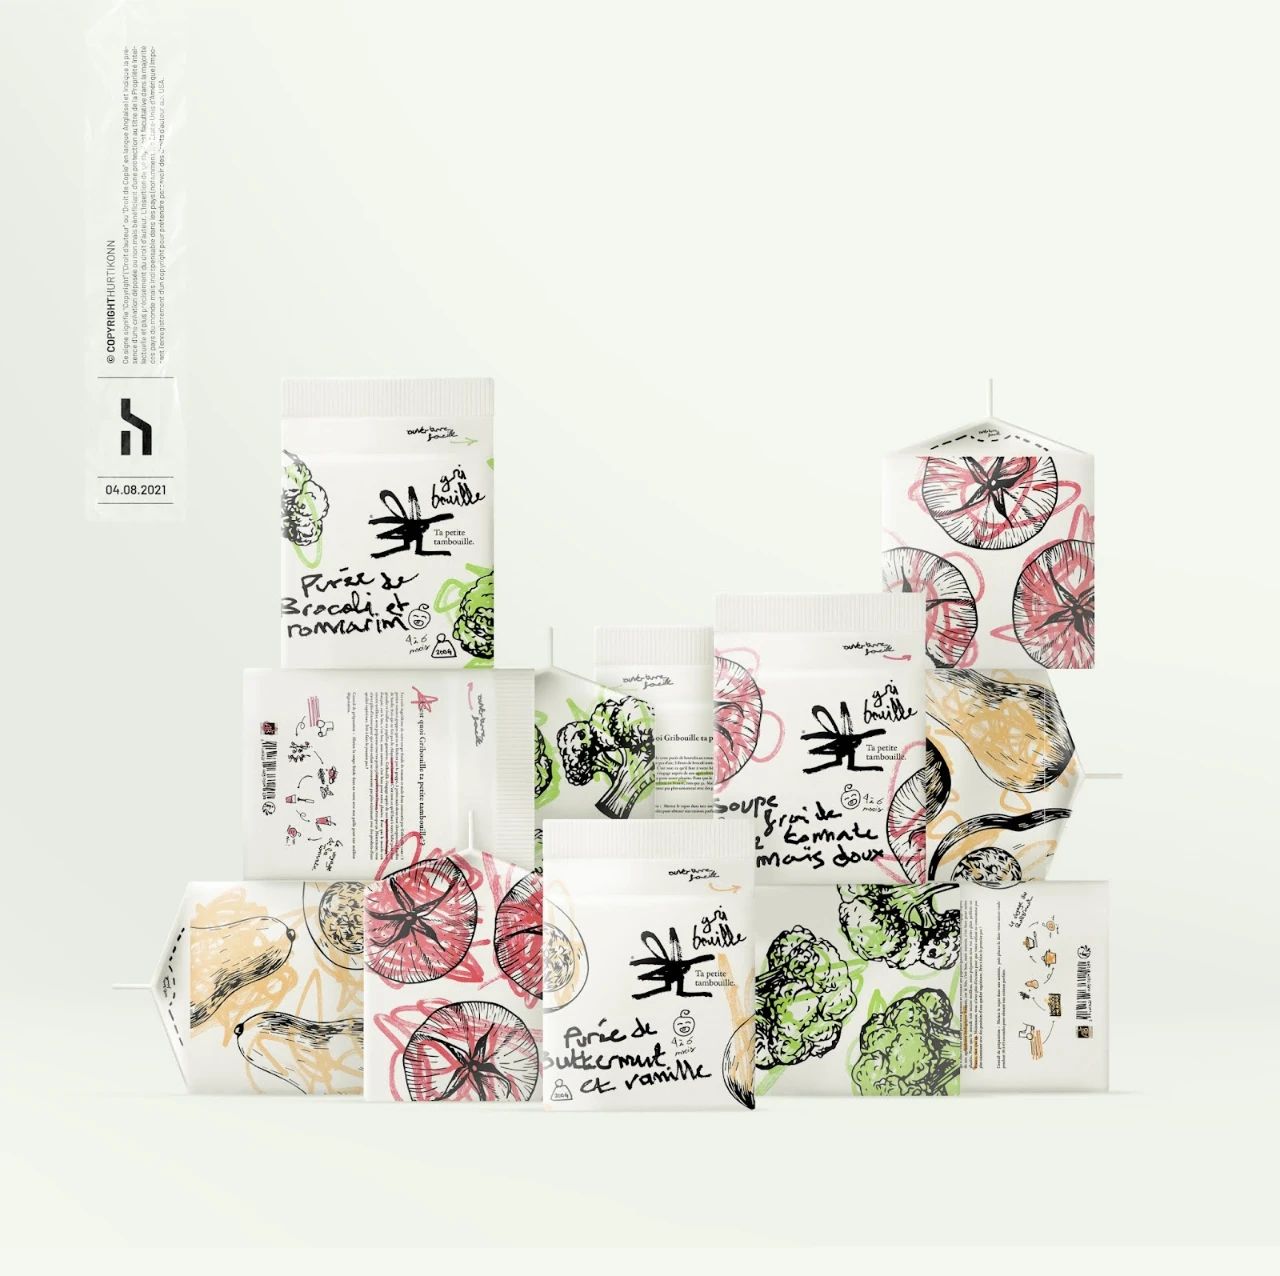 Gribouille儿童食品品牌设计包装设计涂鸦效果